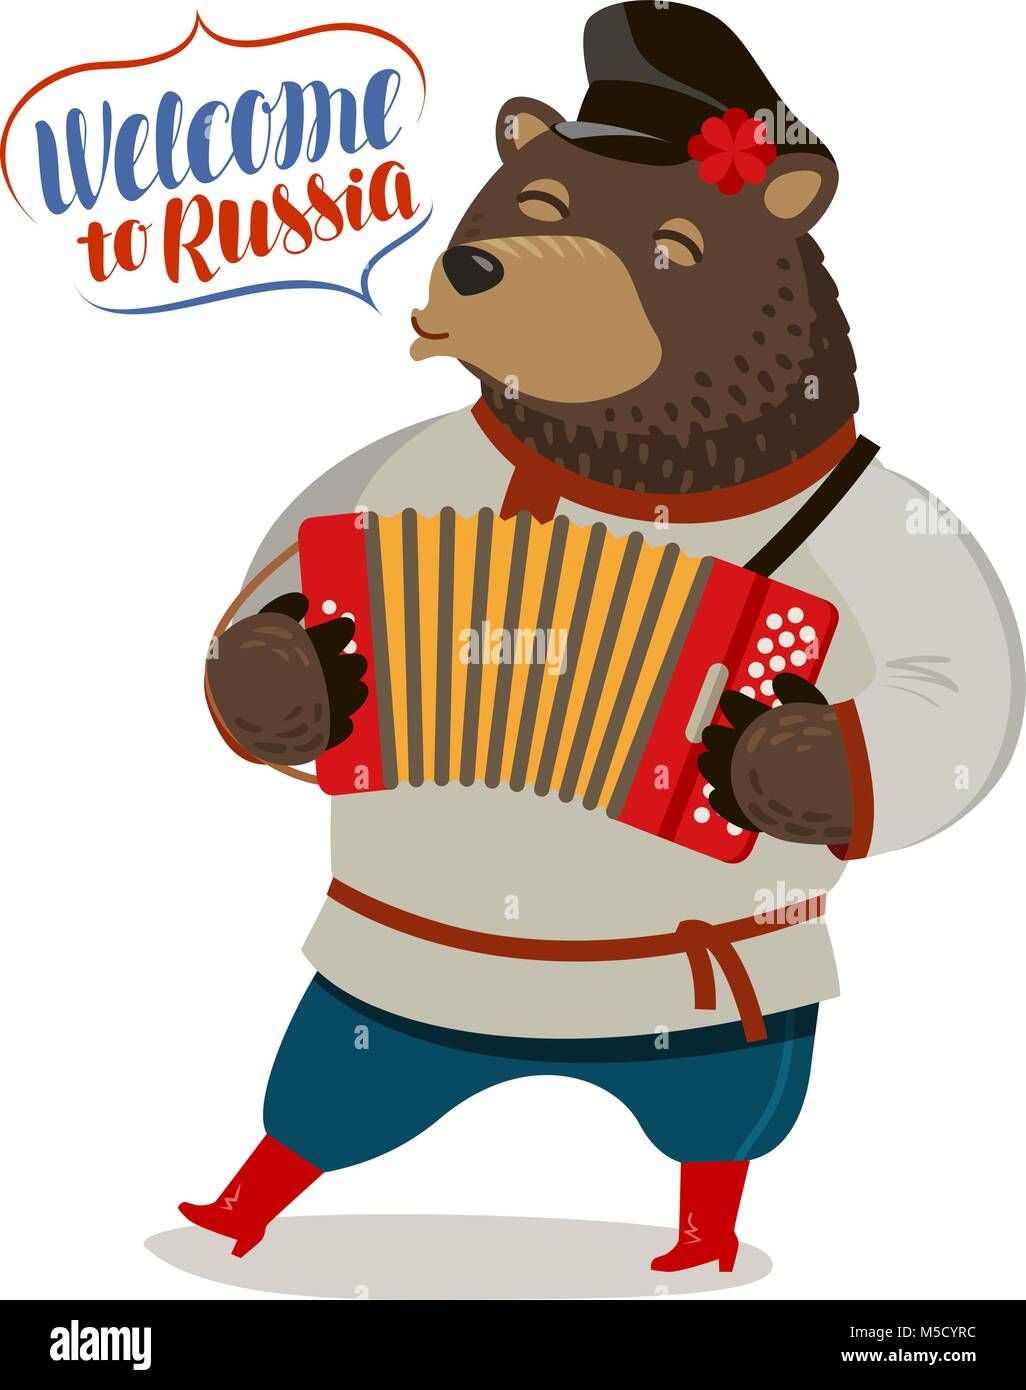 Russische spaß Bär spielt Akkordeon. Zu Russland, banner Willkommen. Cartoon Vector Illustration Stock Vektor